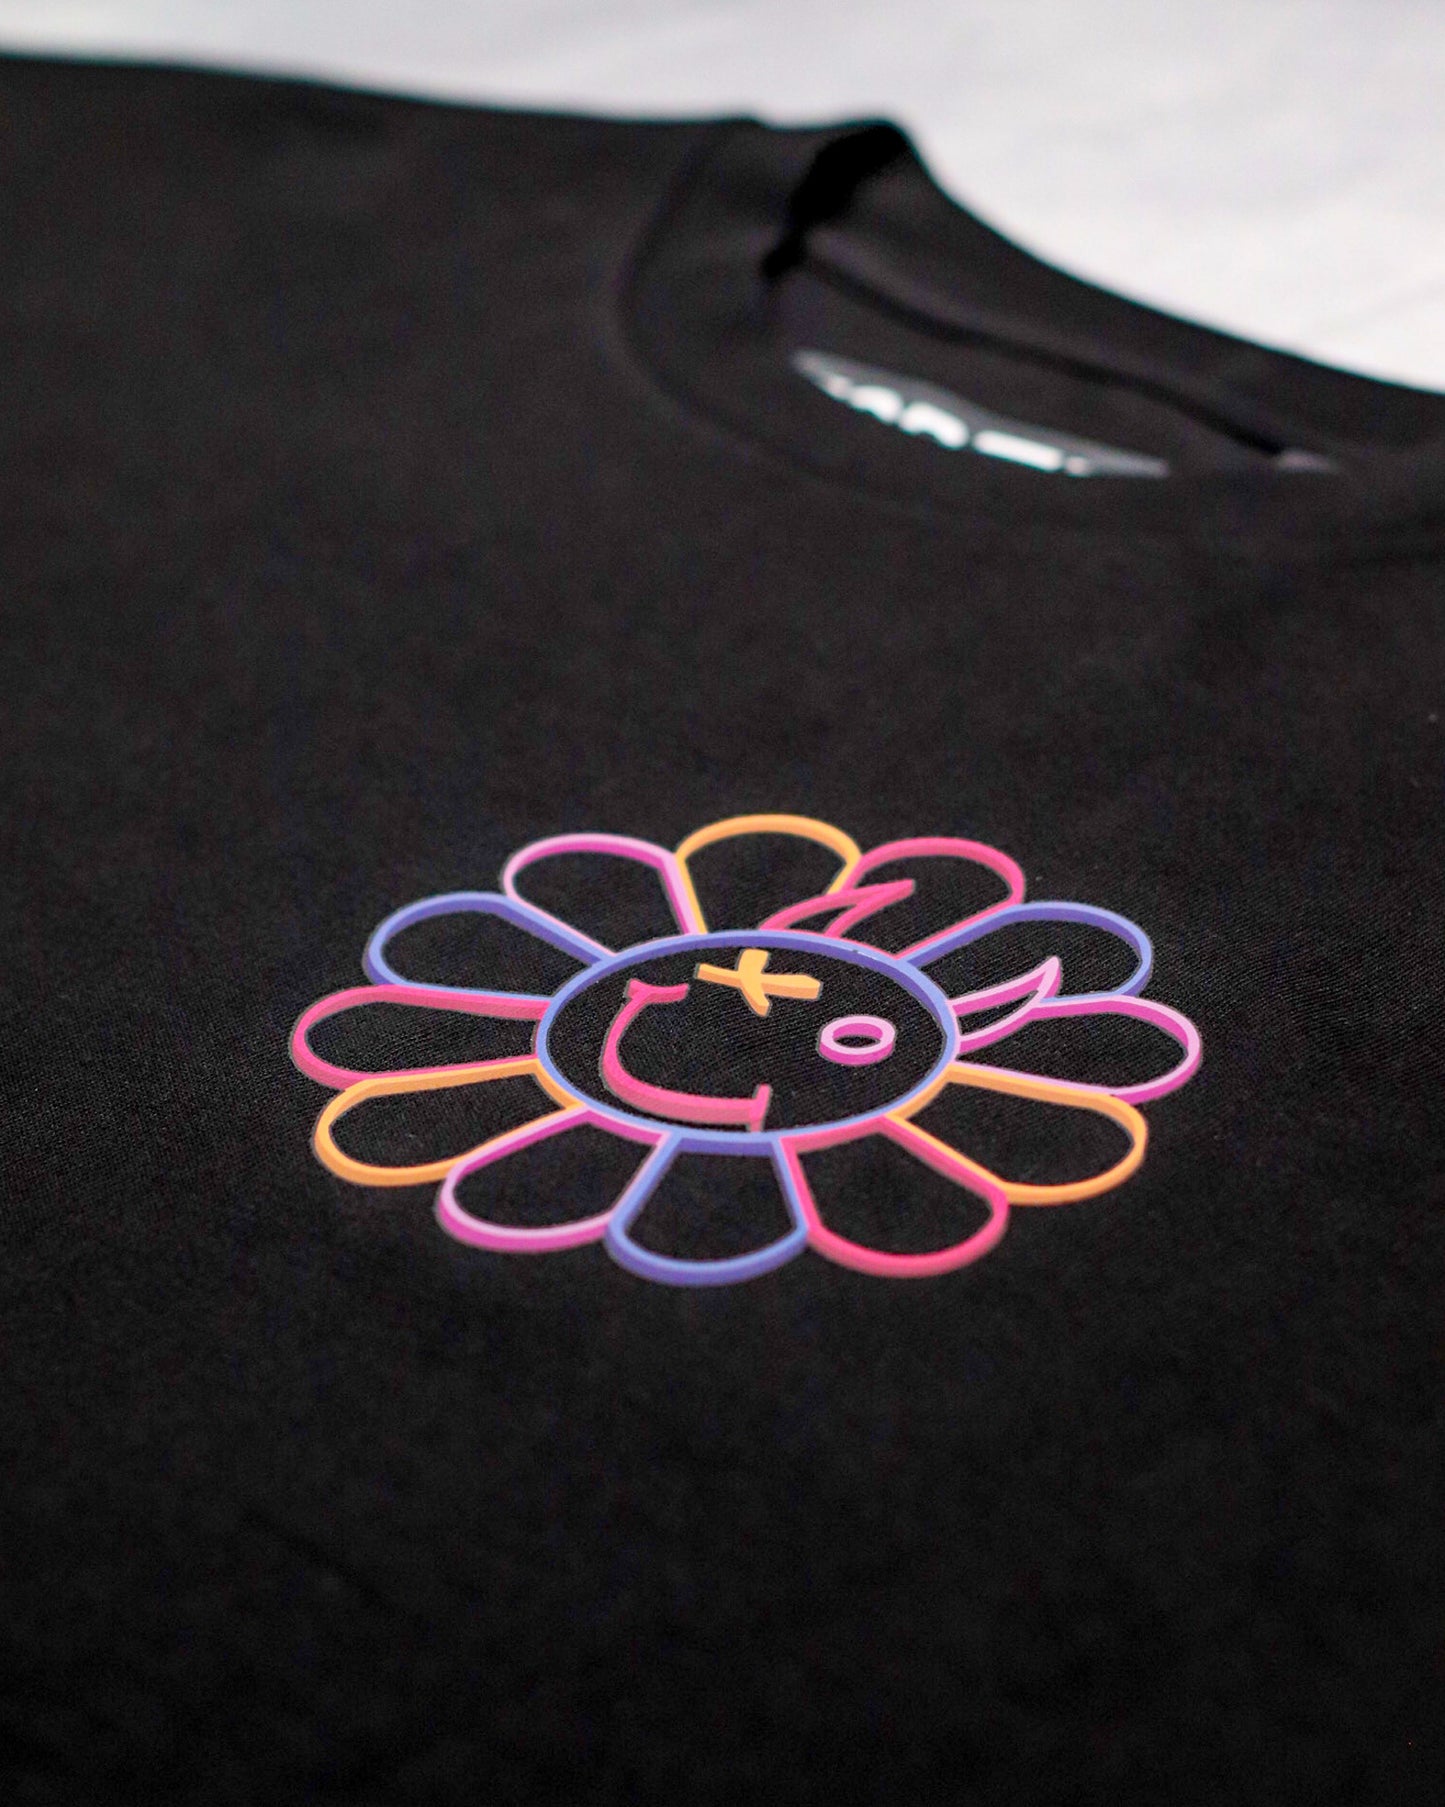 Black Multicolour Takashi Murakami T-Shirt